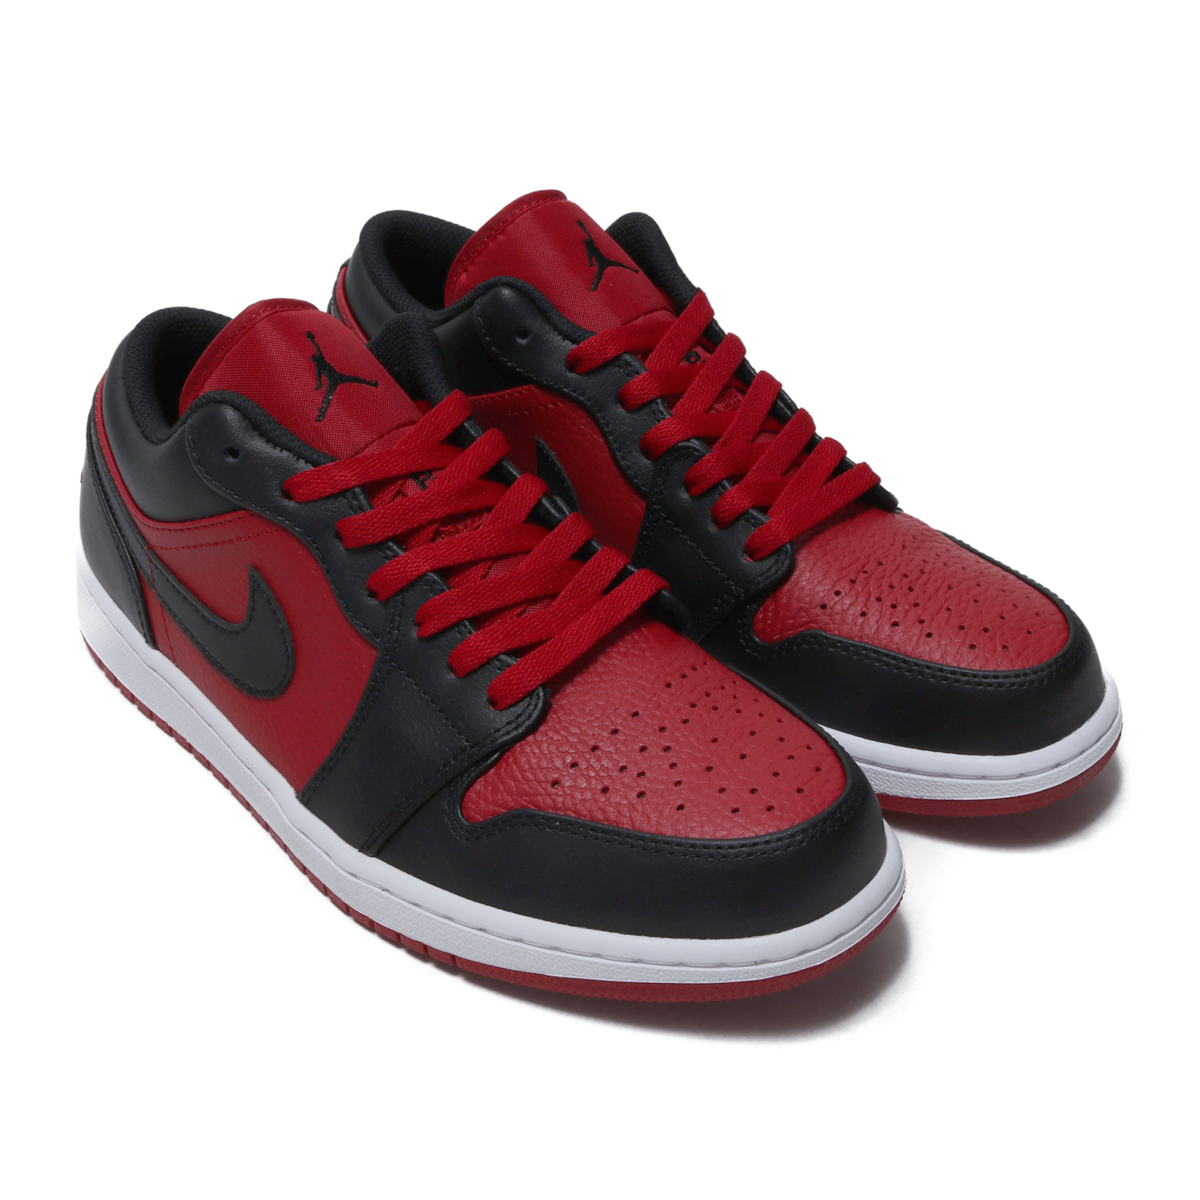 Джорданы лов. Nike Air Jordan 1 Low Red. Nike Air Jordan 1 Low Red Black White. Nike Jordan 1 Low Red. Nike Air Jordan 1 Low Gym Red.